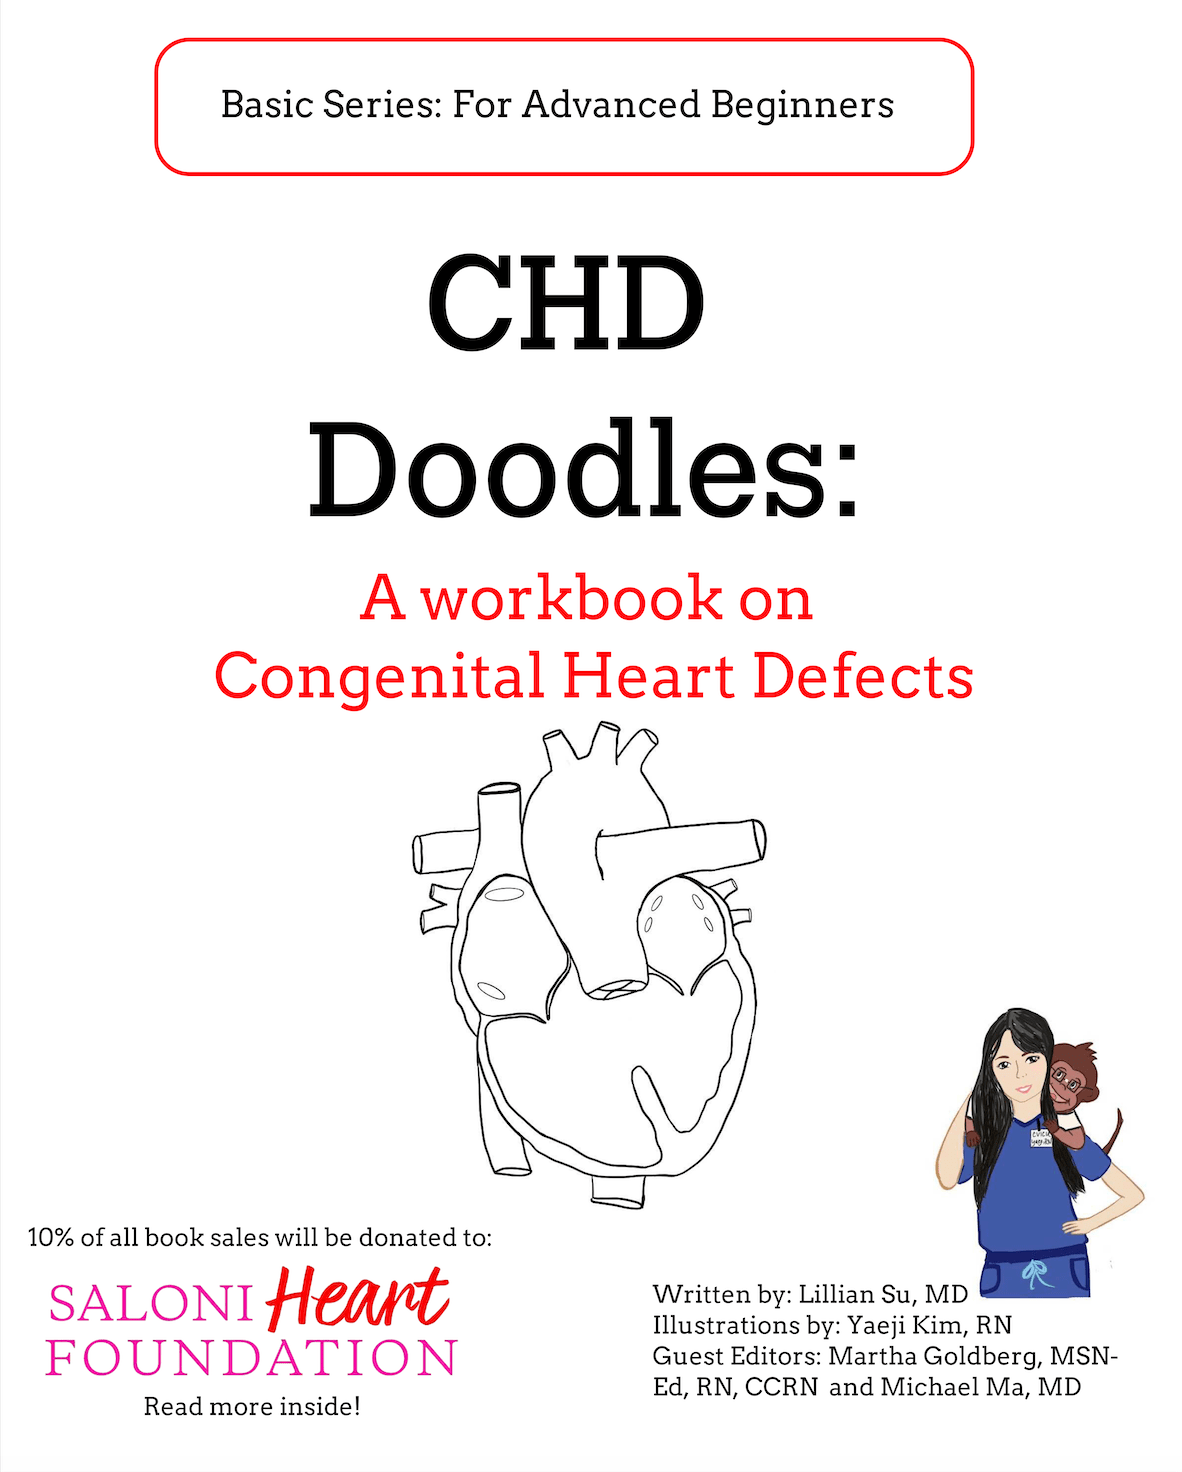 A Workbook on Congenital Heart Defects